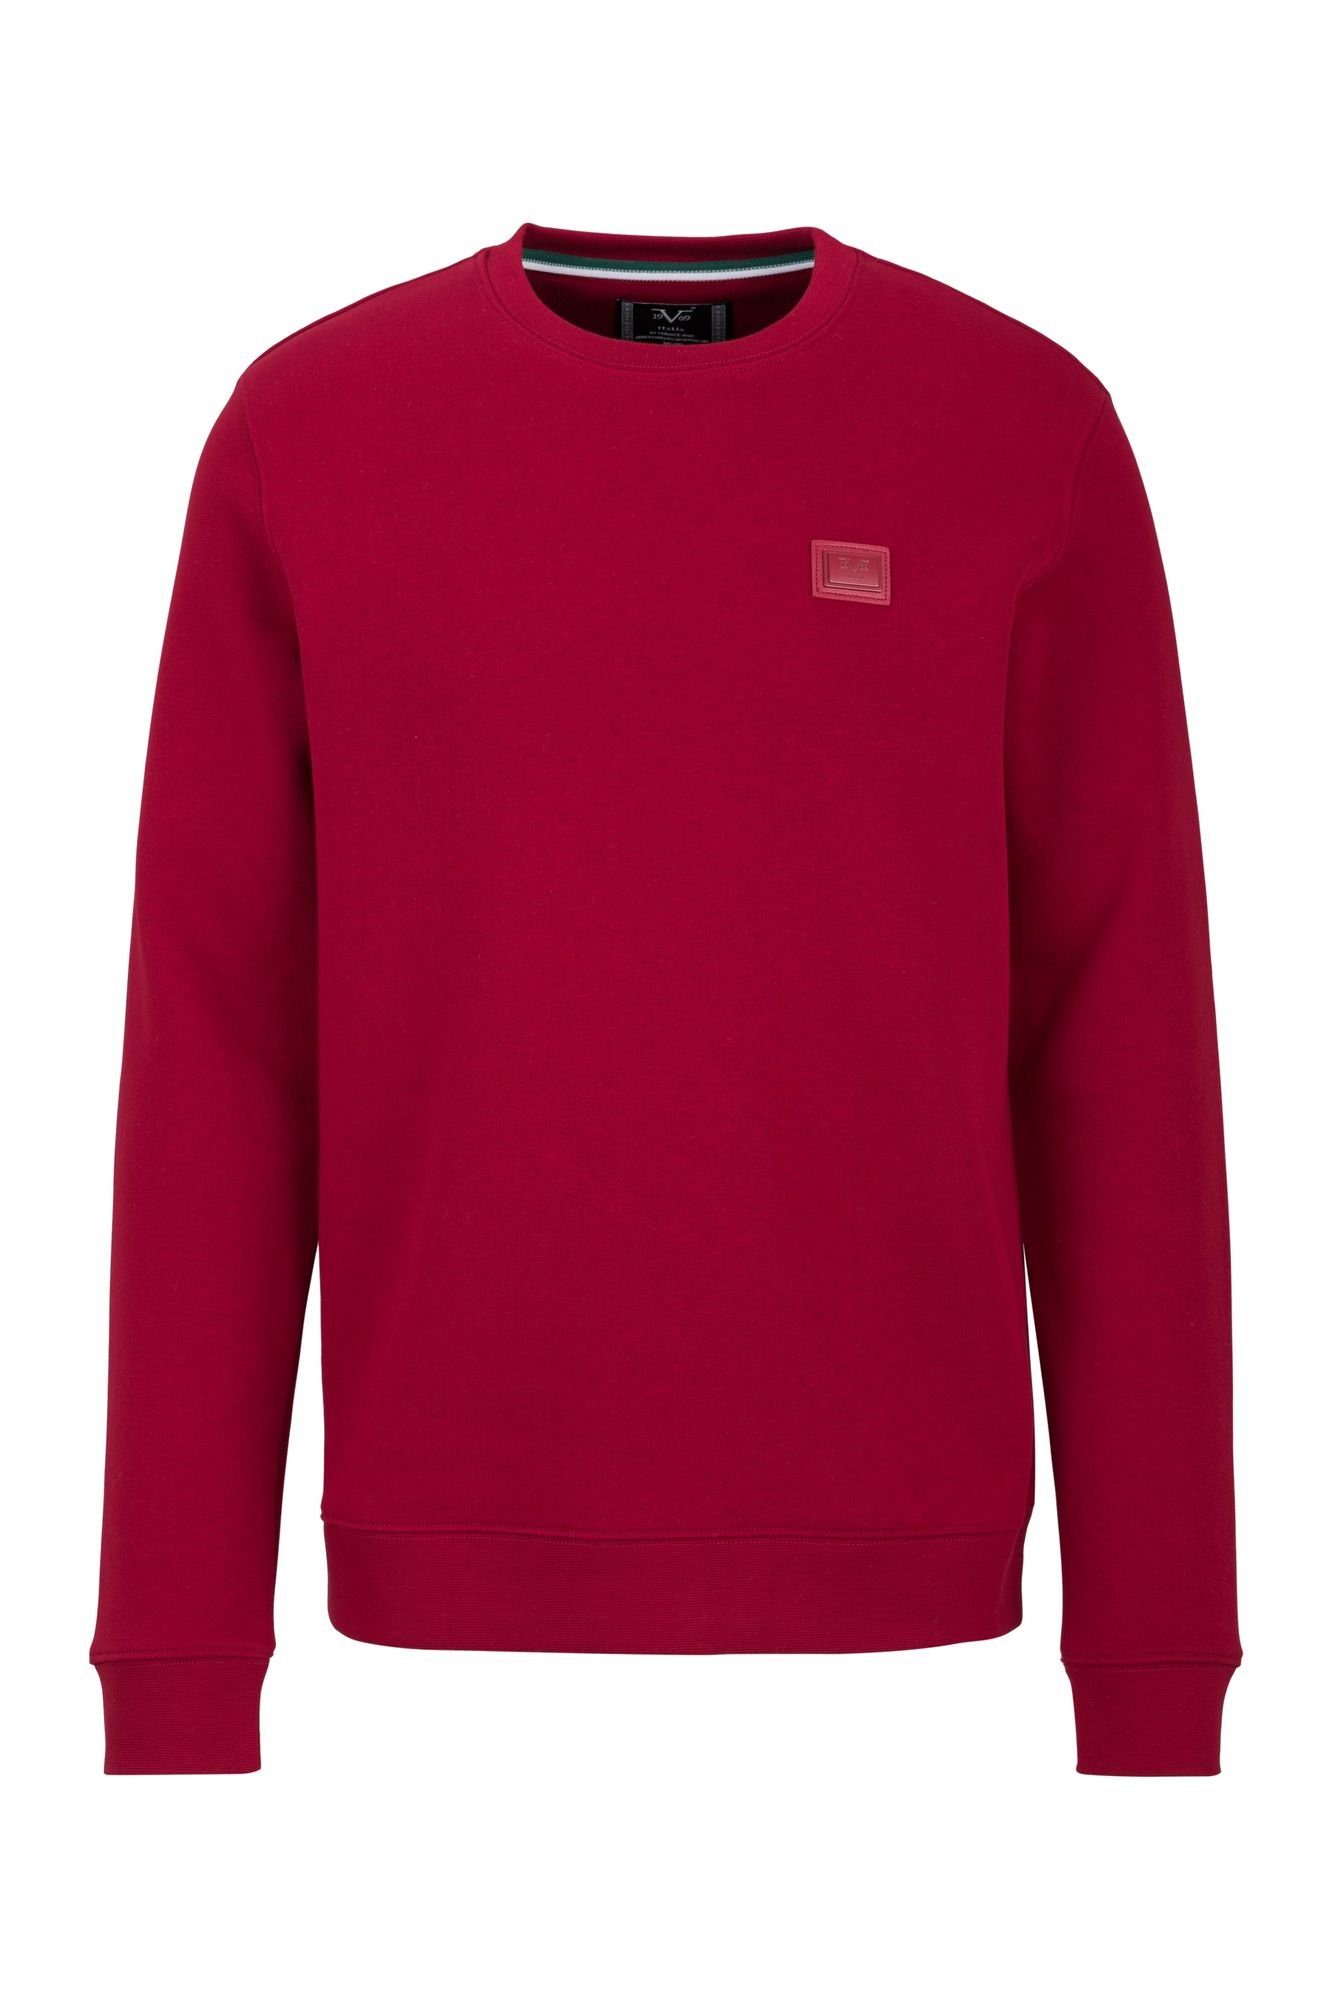 19V69 Italia by Versace Sweatshirt by Versace Sportivo SRL - Nico | Sweatshirts